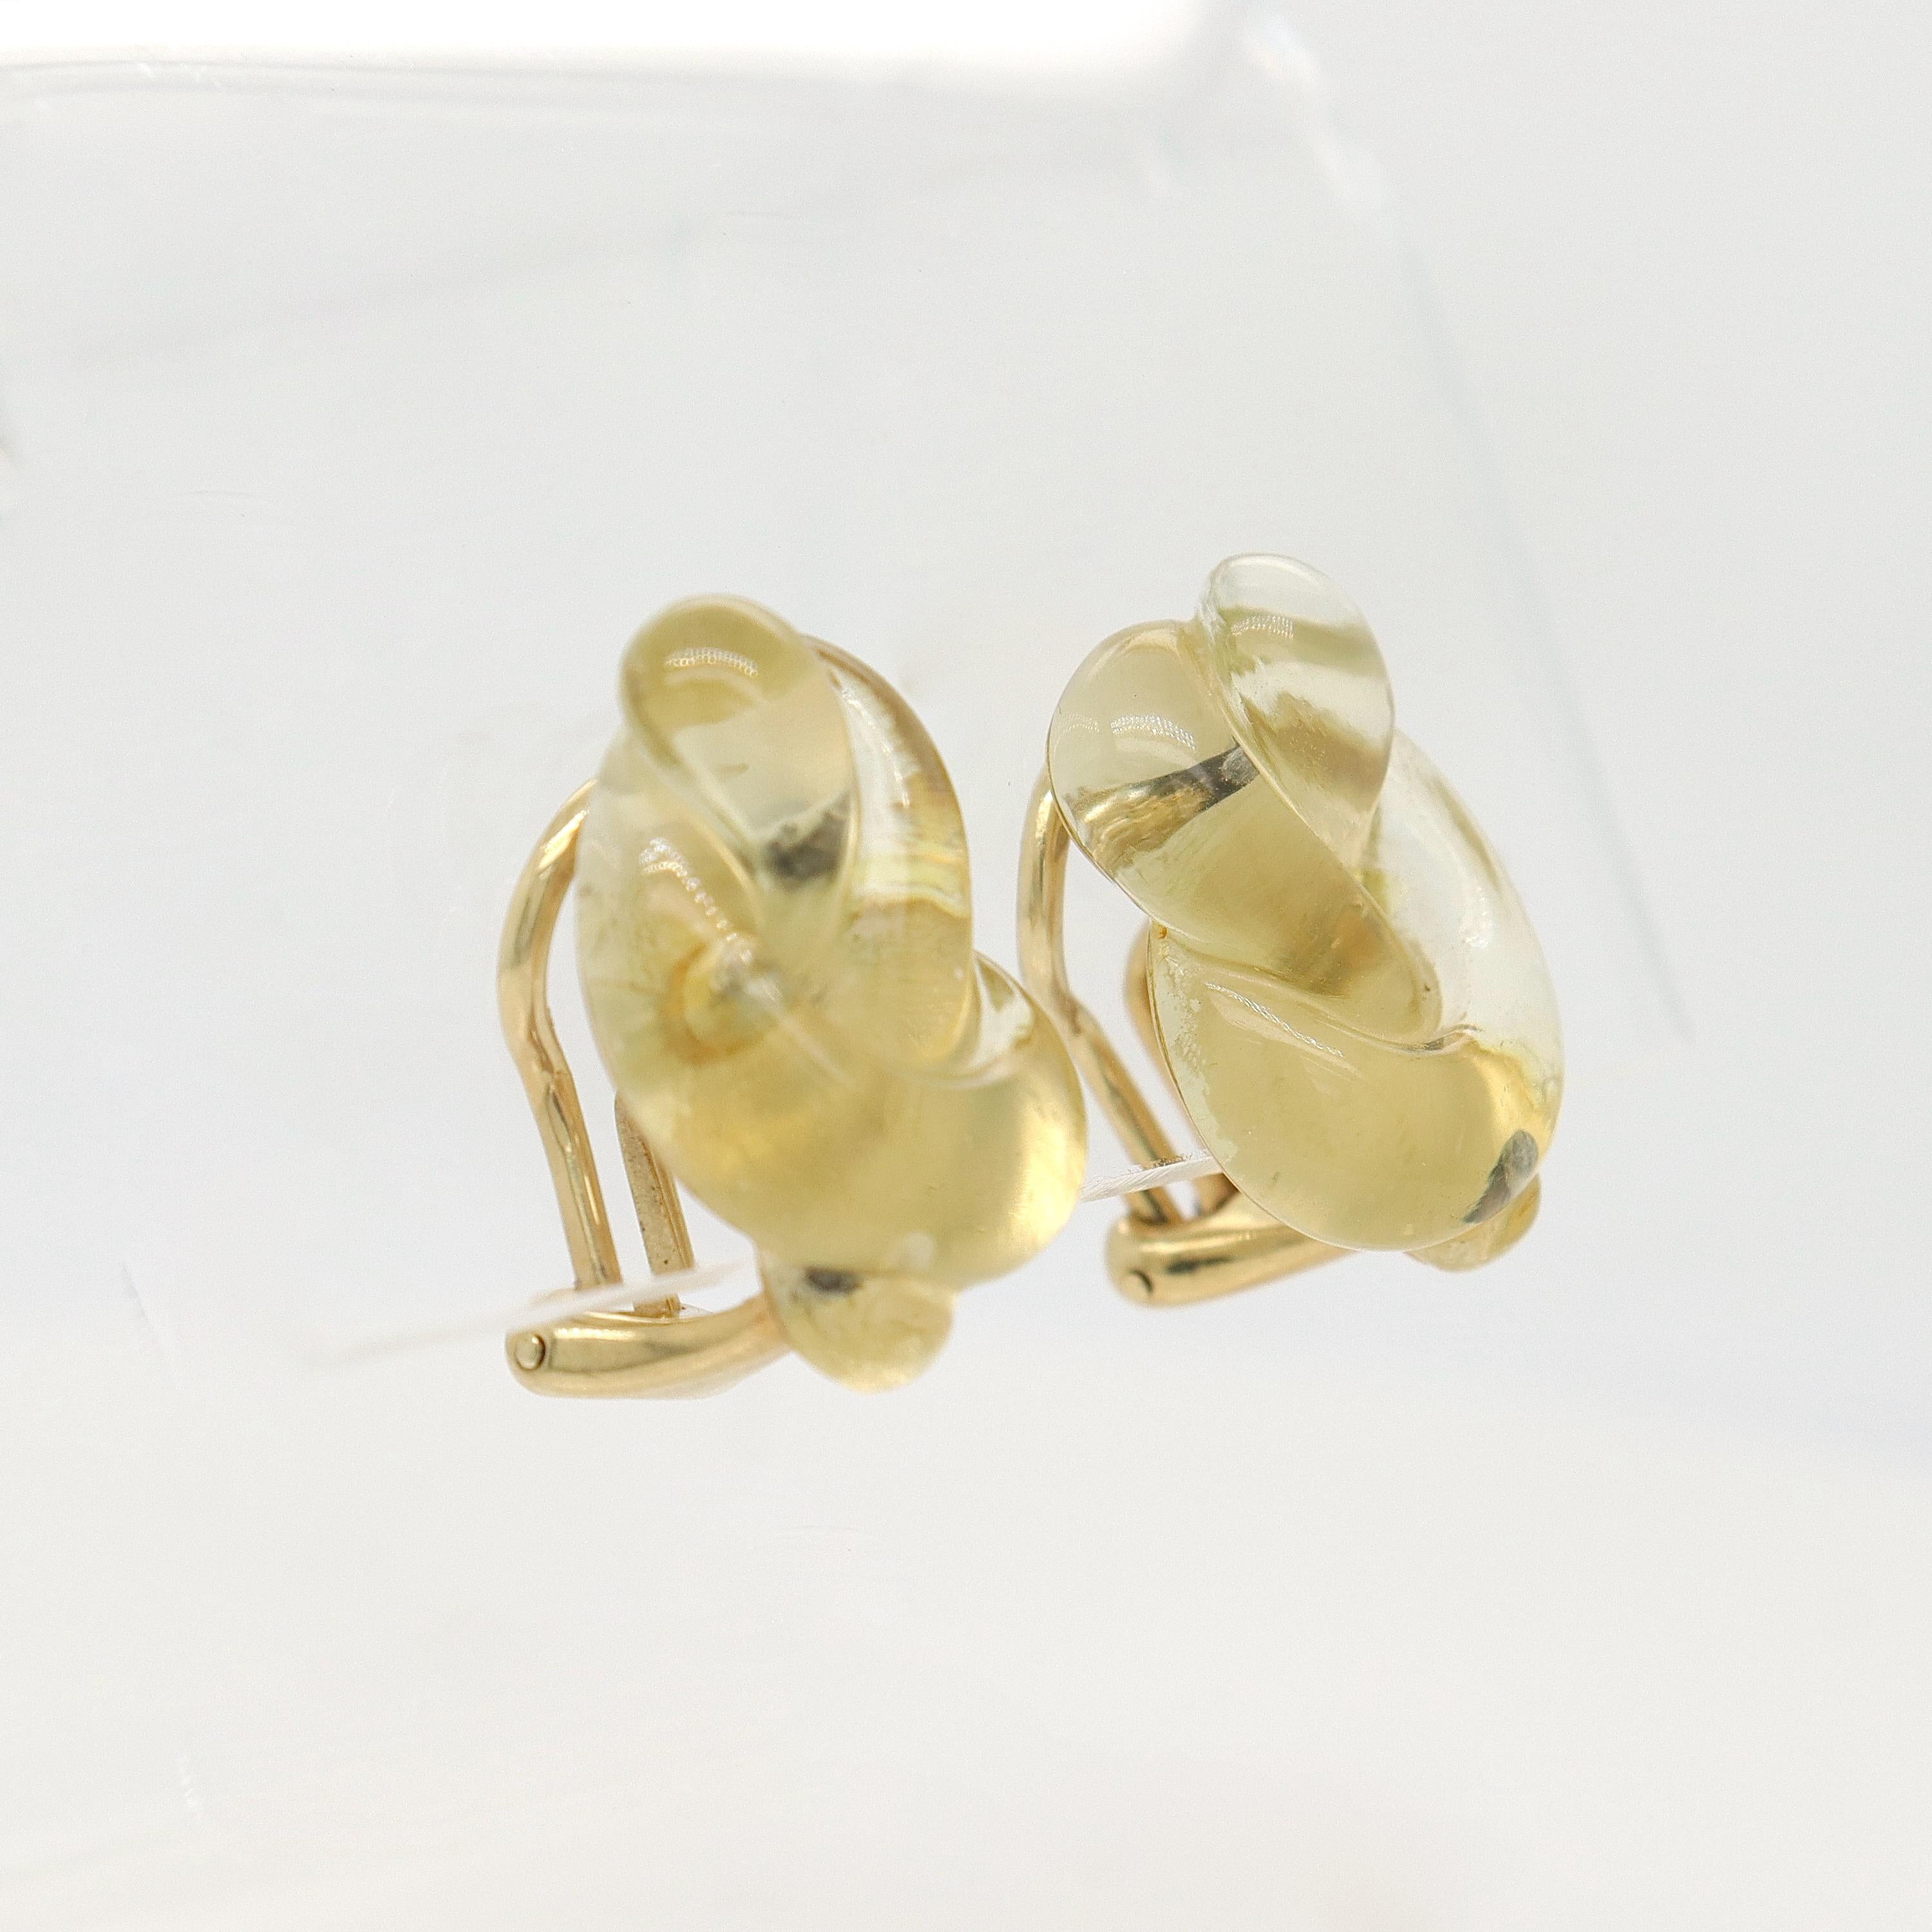 Pair Tiffany & Co 18K Gold & Glass Modern Pretzel Earrings by Angela Cummings In Good Condition For Sale In Philadelphia, PA